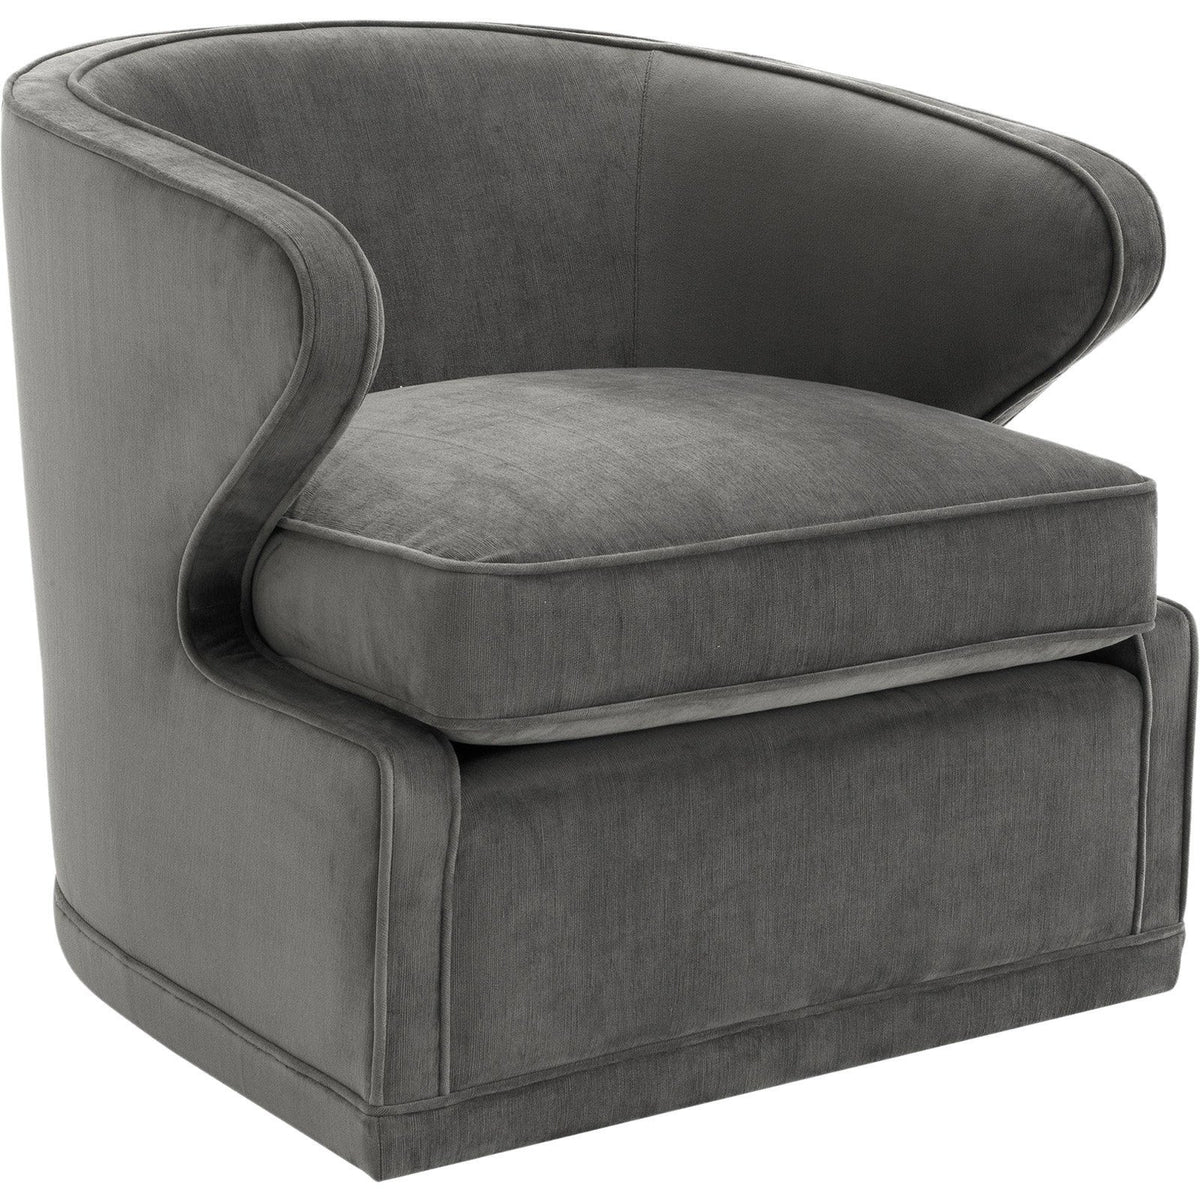 Dorset Chair - Granite